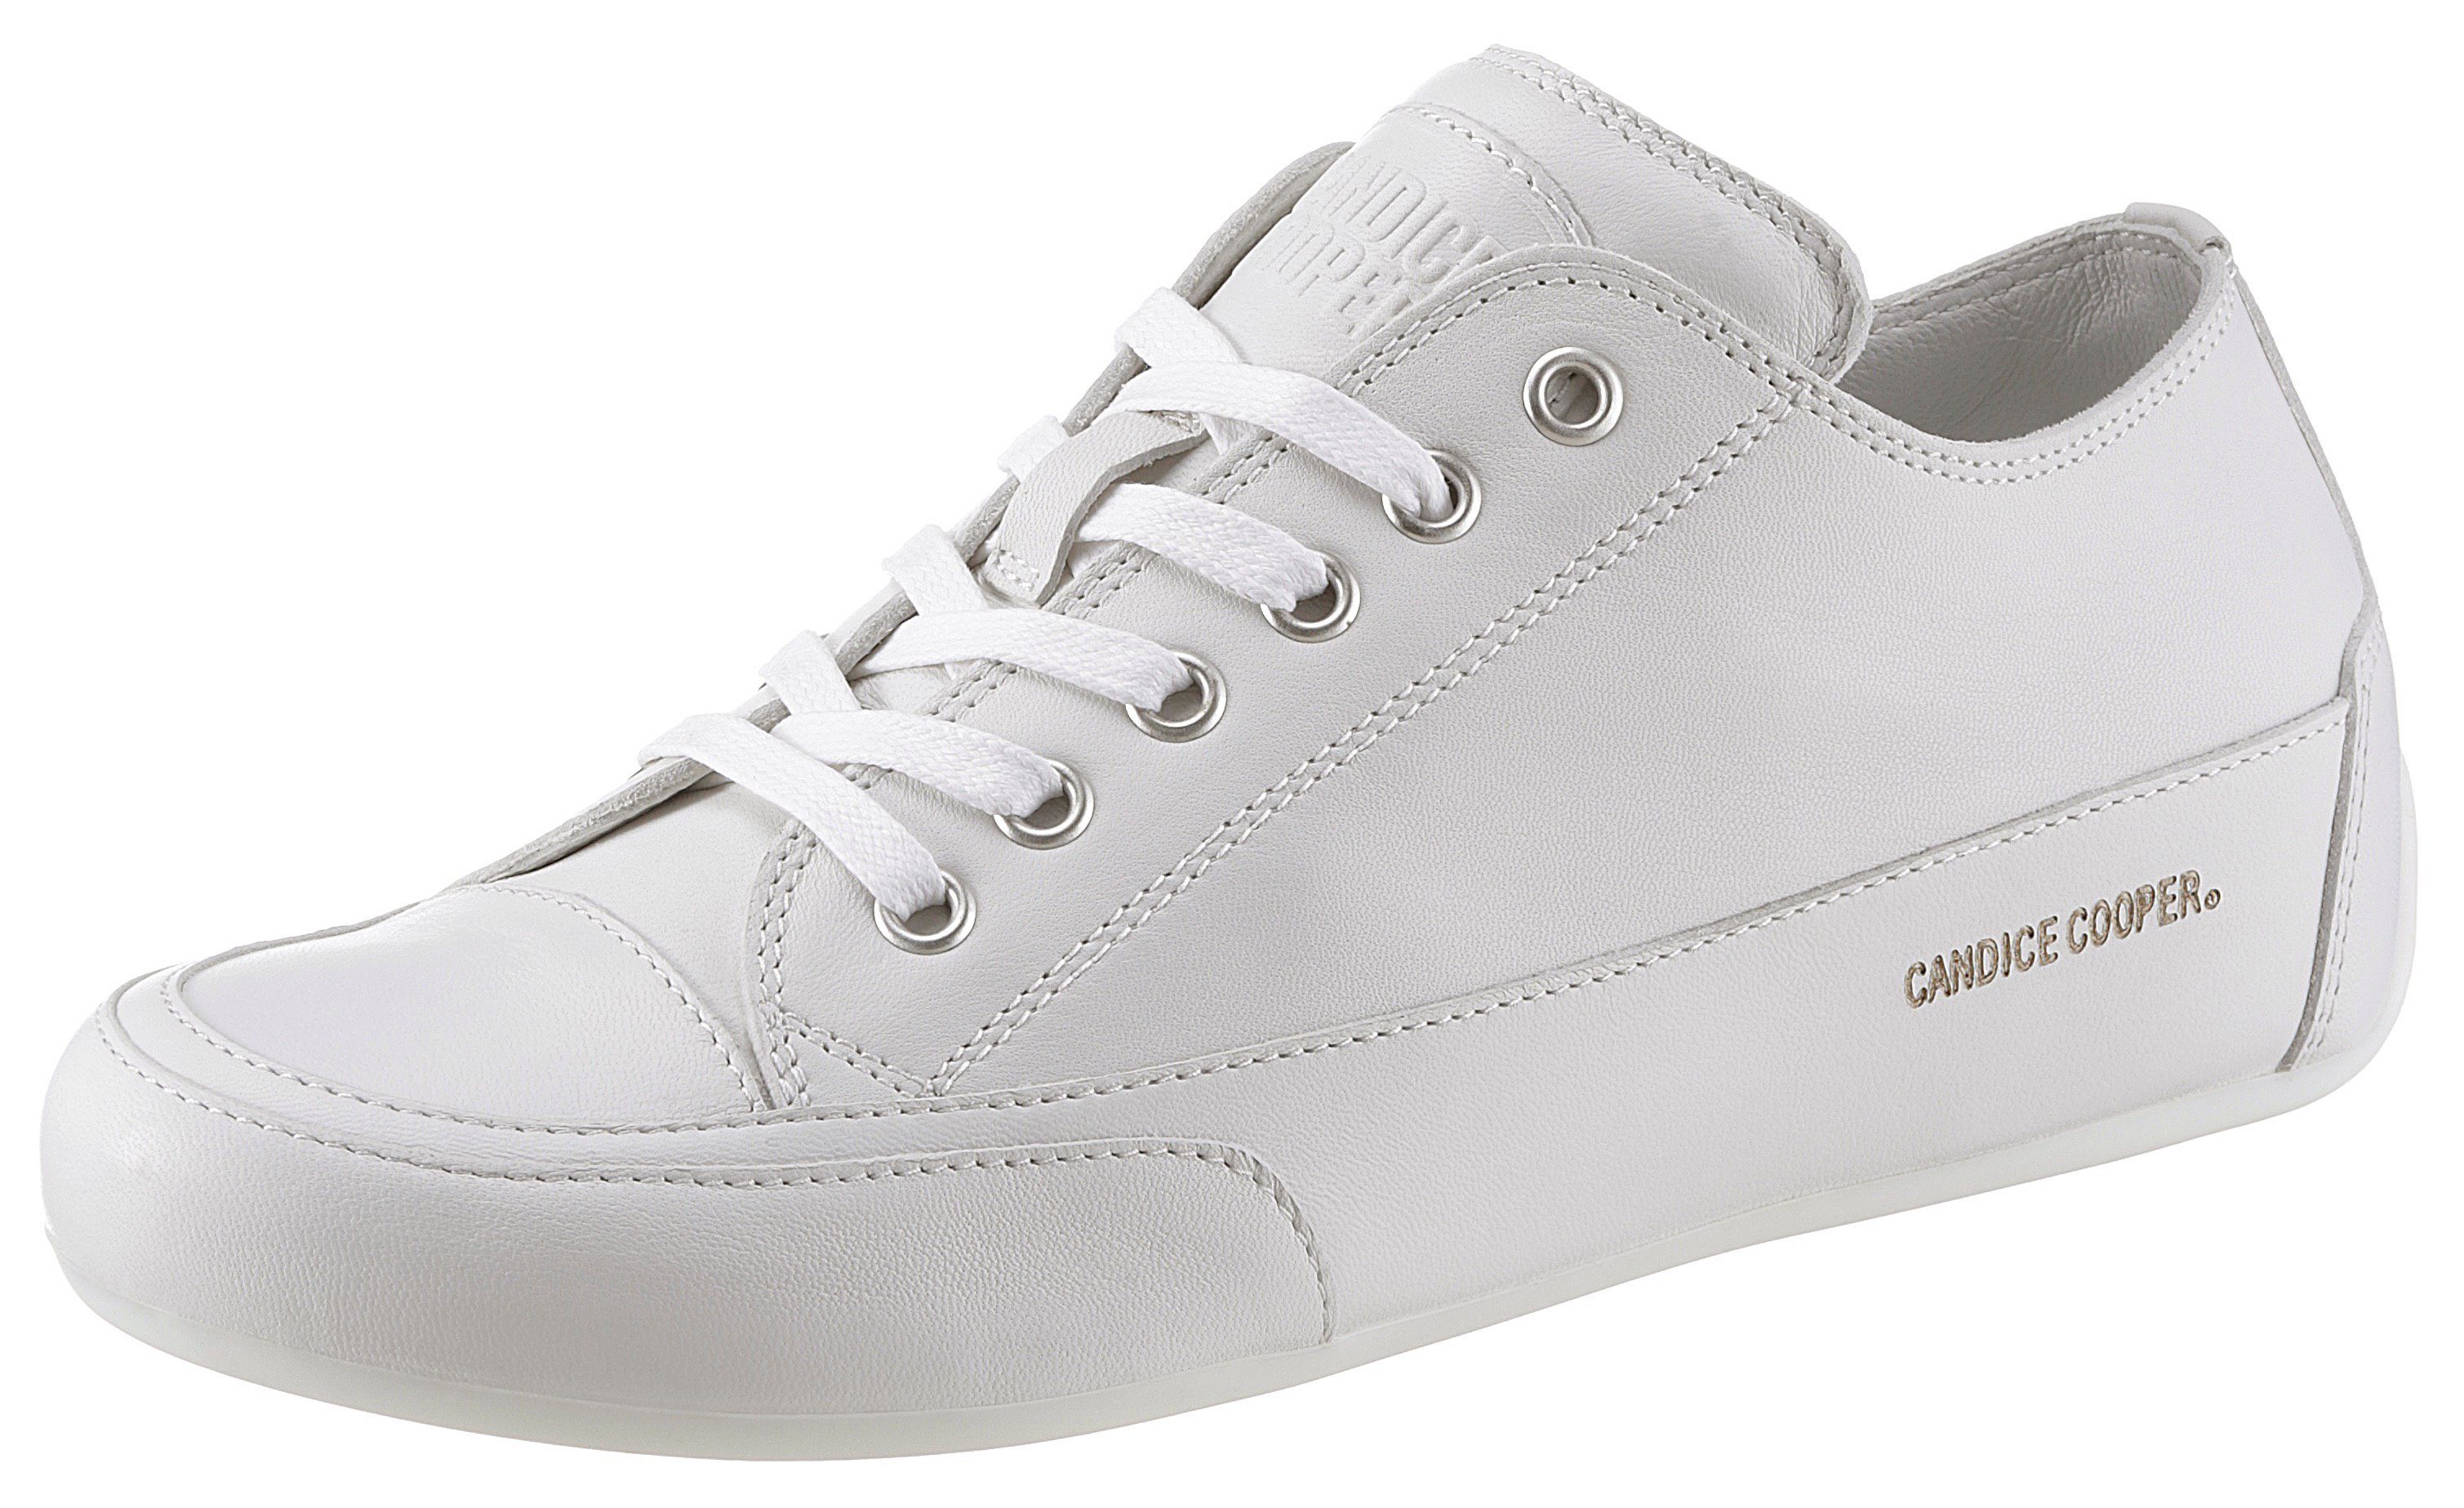 Candice Cooper »Sneakers Low« Sneaker kaufen | OTTO